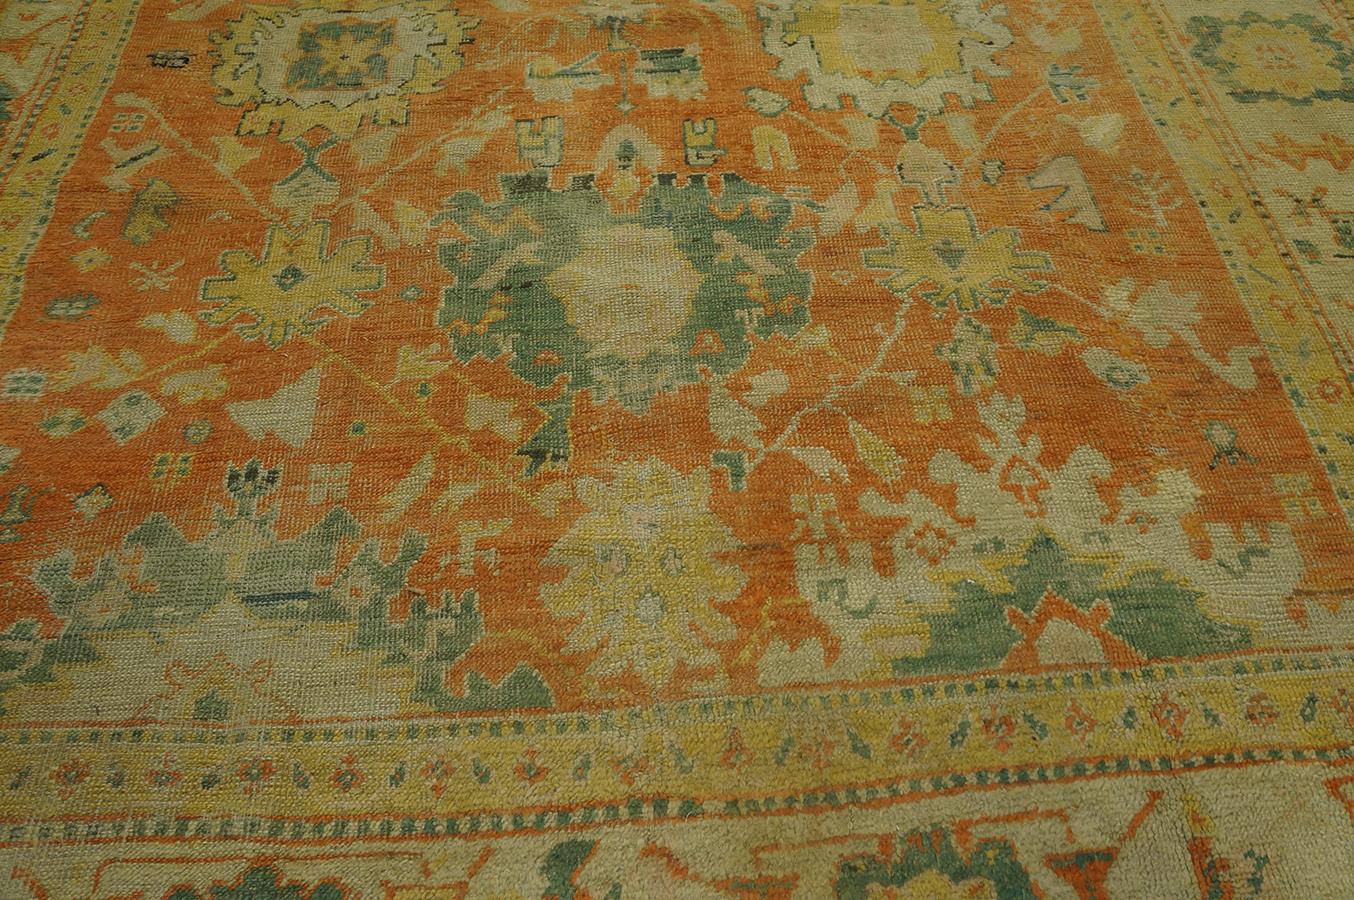 Late 19th Century Turkish Anatolian Oushak Carpet (8'4''x 11'2'' - 254 x 340 cm) For Sale 5